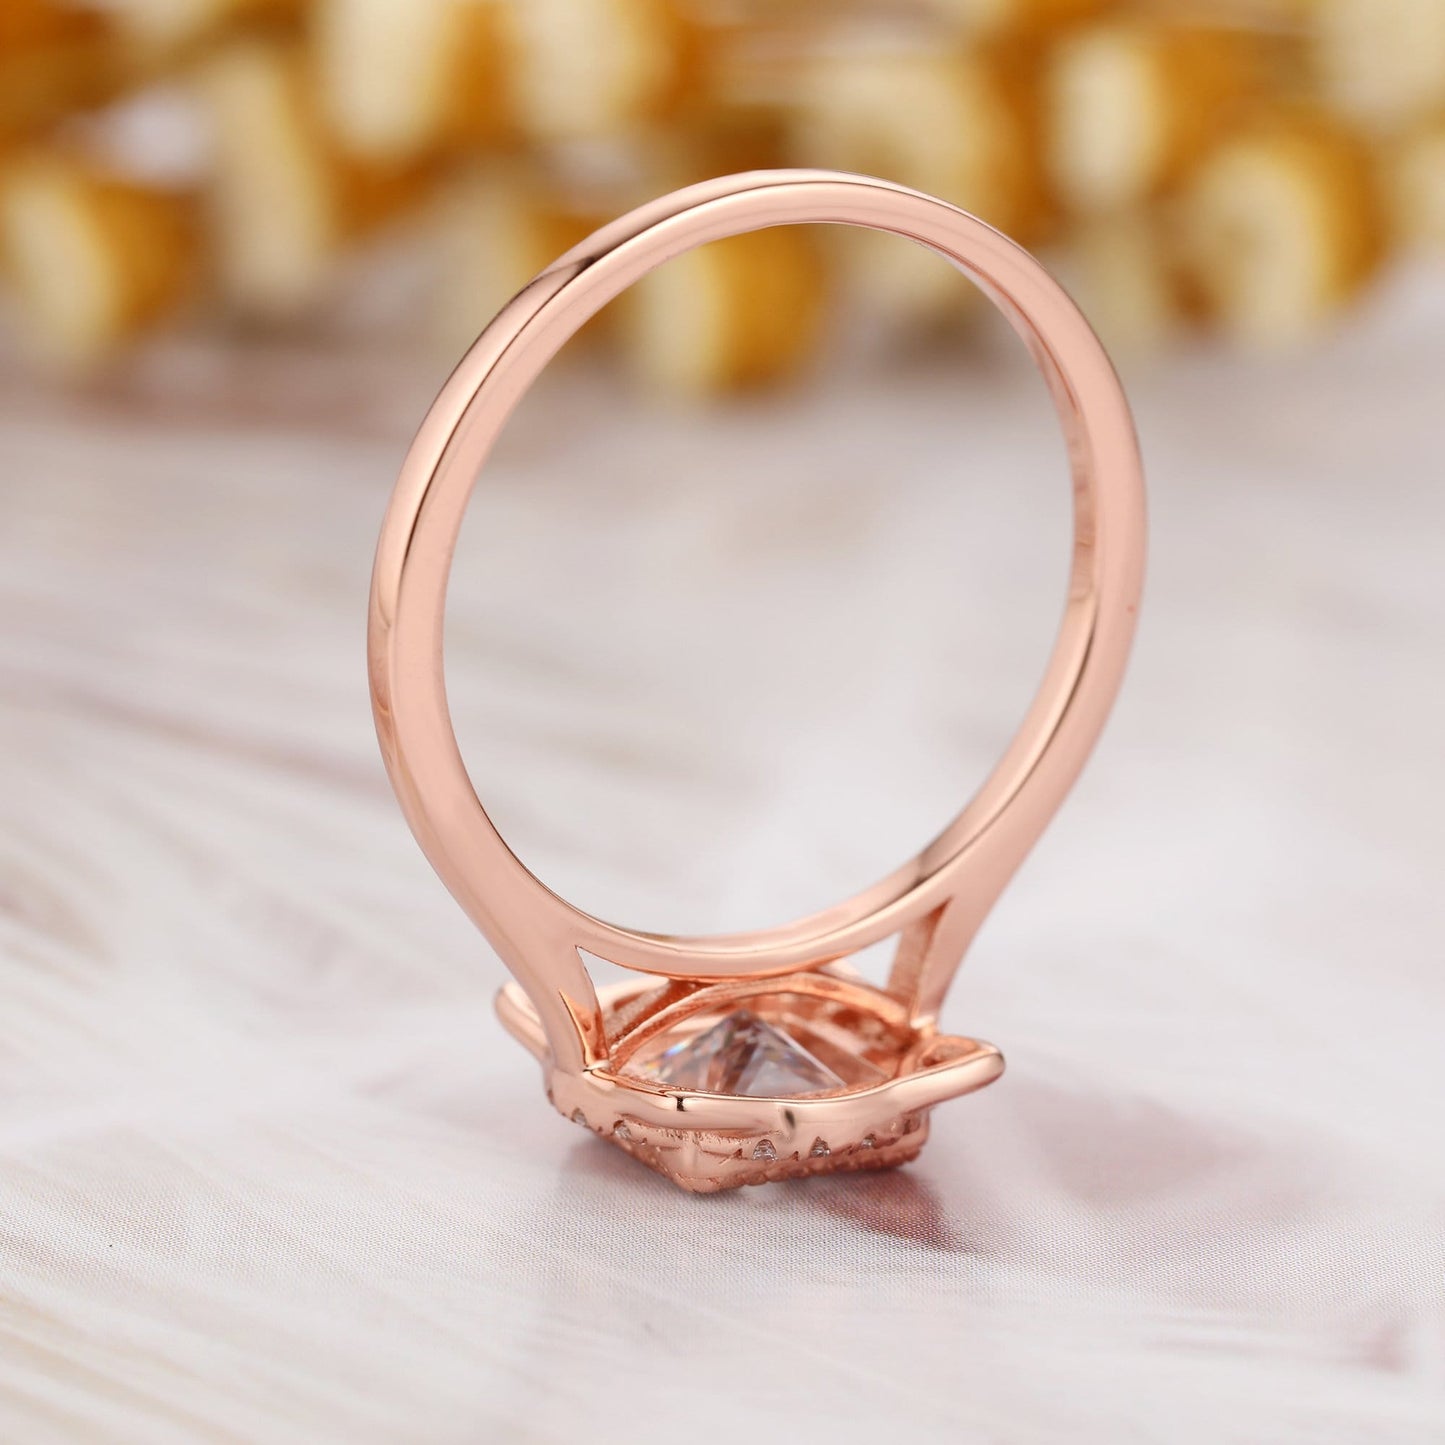 Antique Halo Wedding Ring, 1.0CT Princess Cut Moissanite Engagement Ring